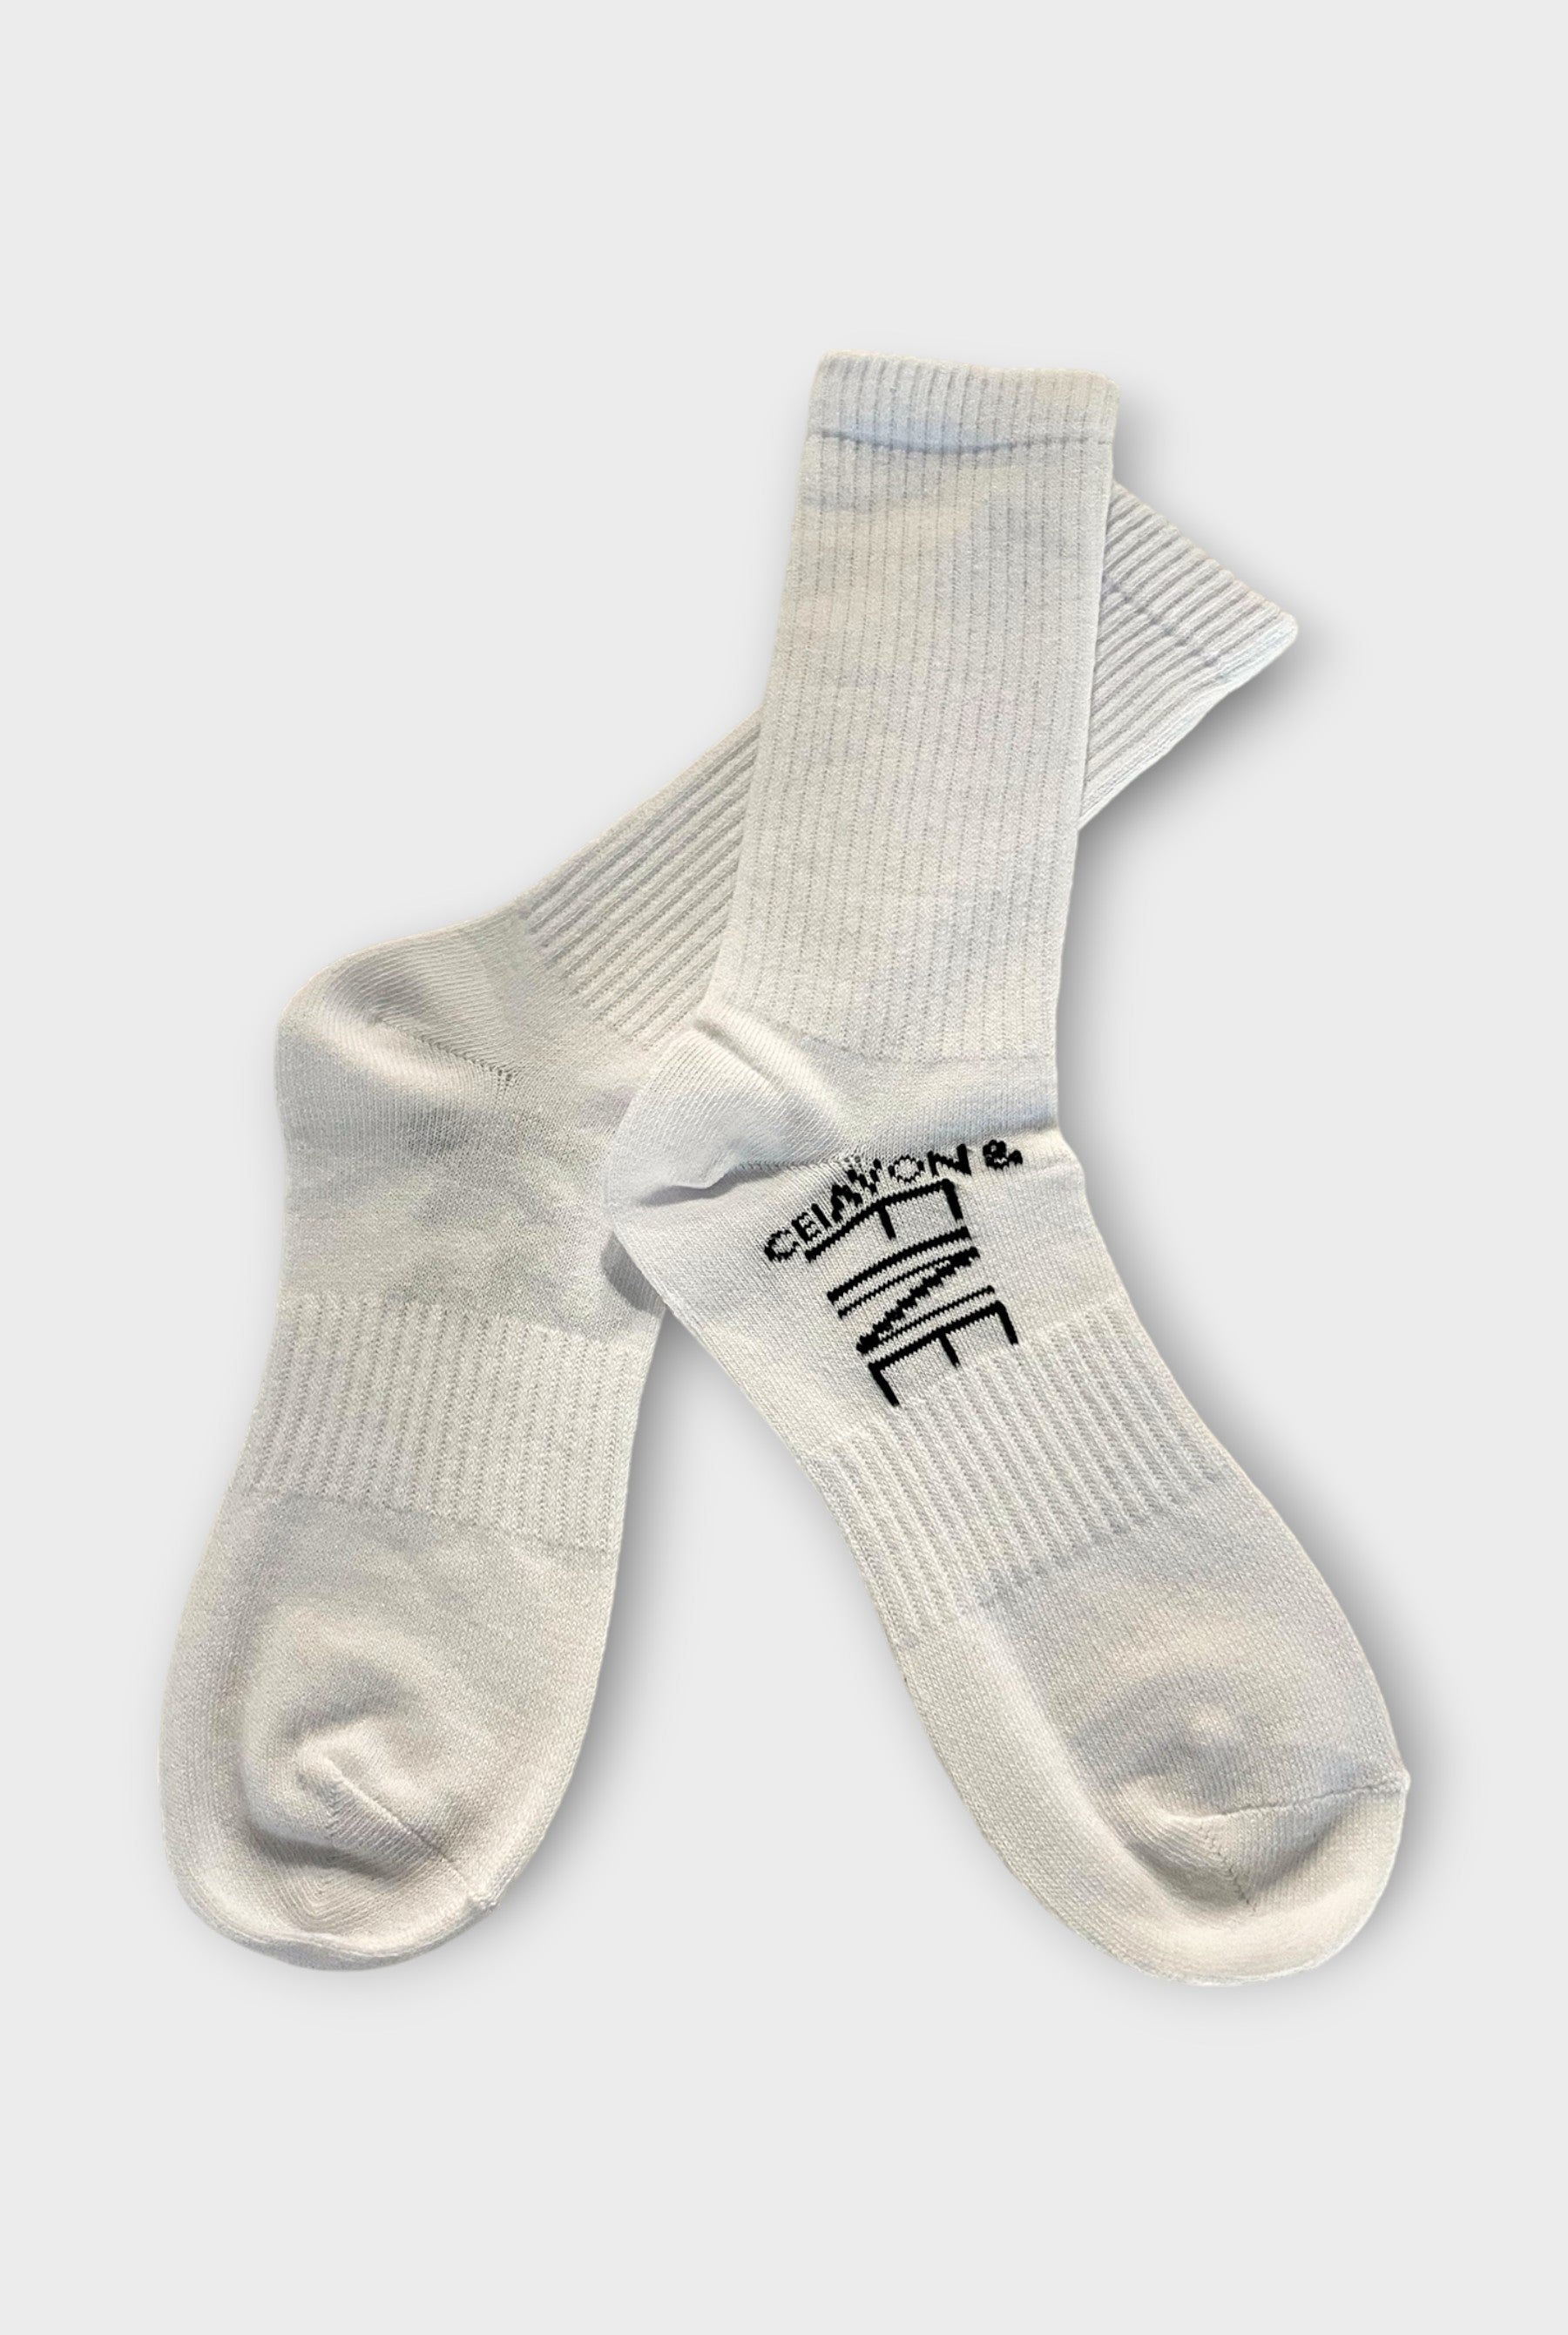 Ceiavon & Fine Tube Socks (2 pk)